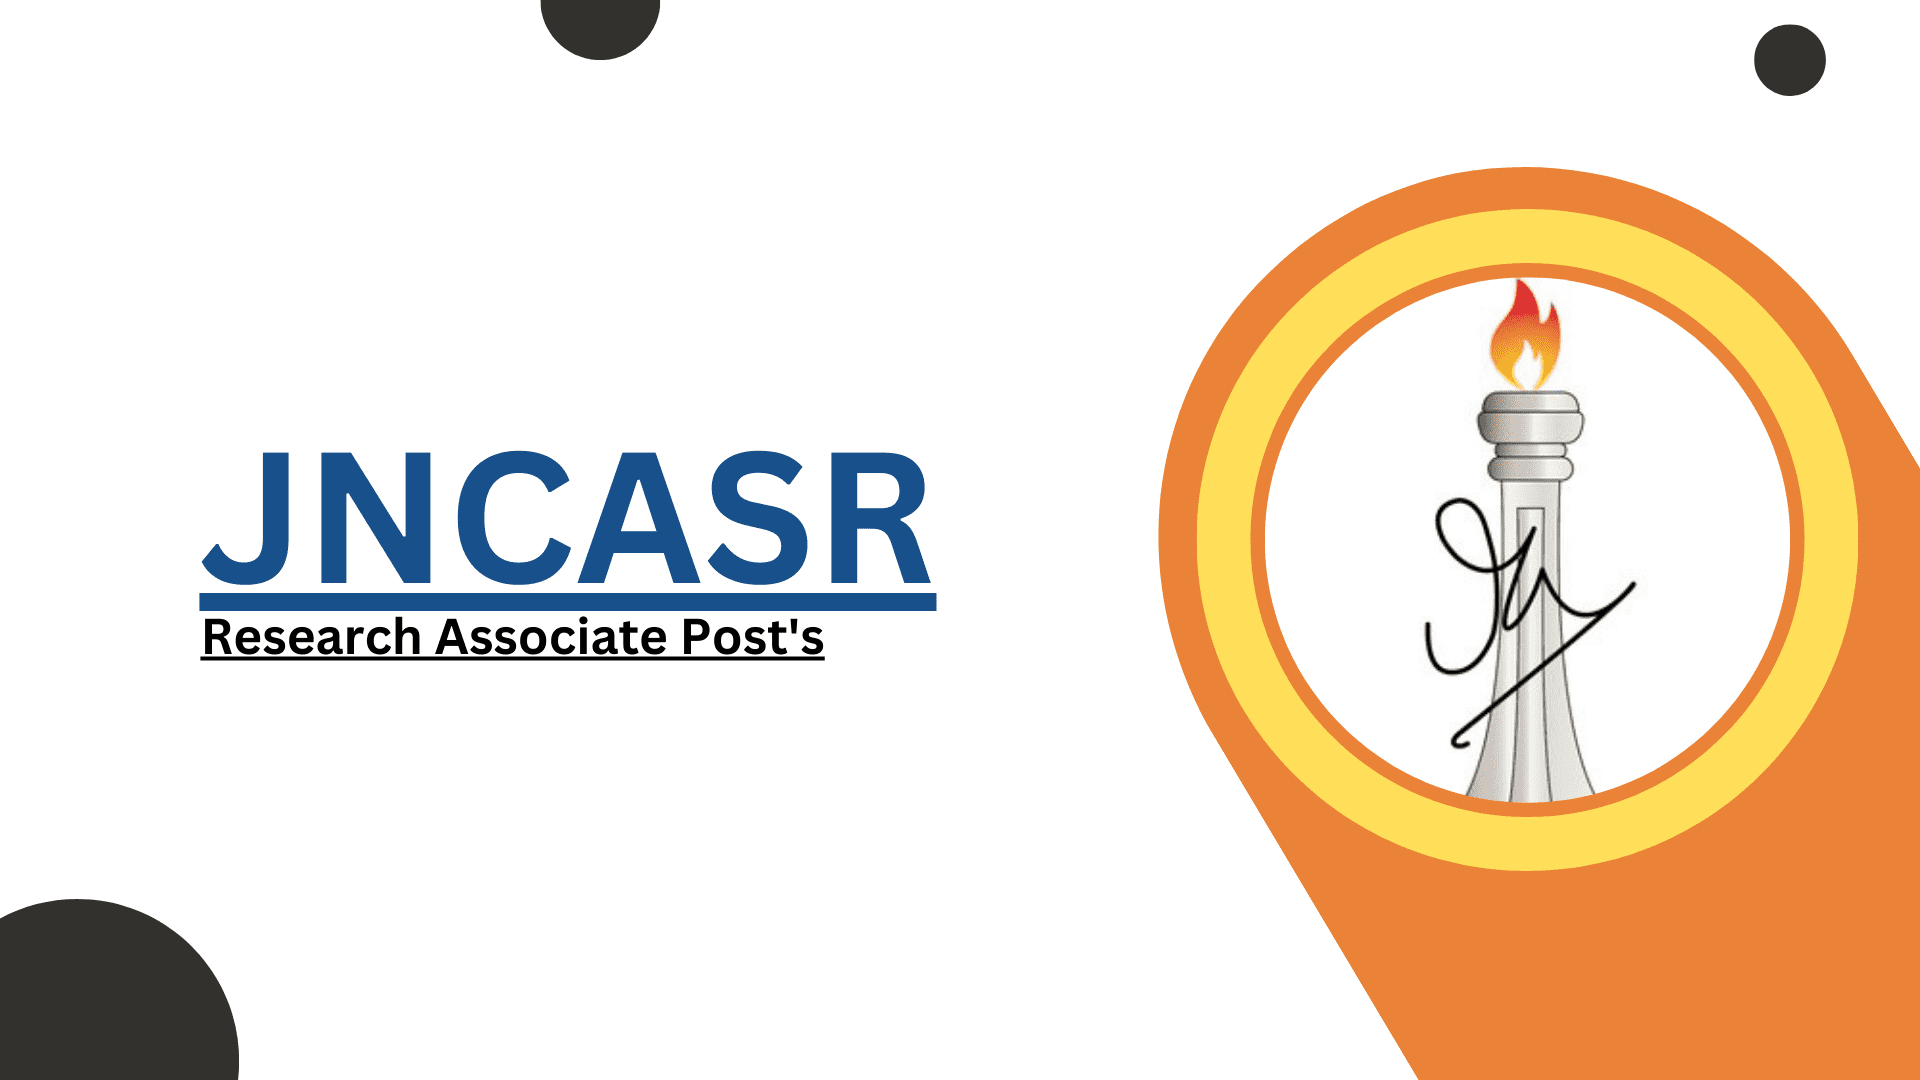 Research Associate Post at JNCASR